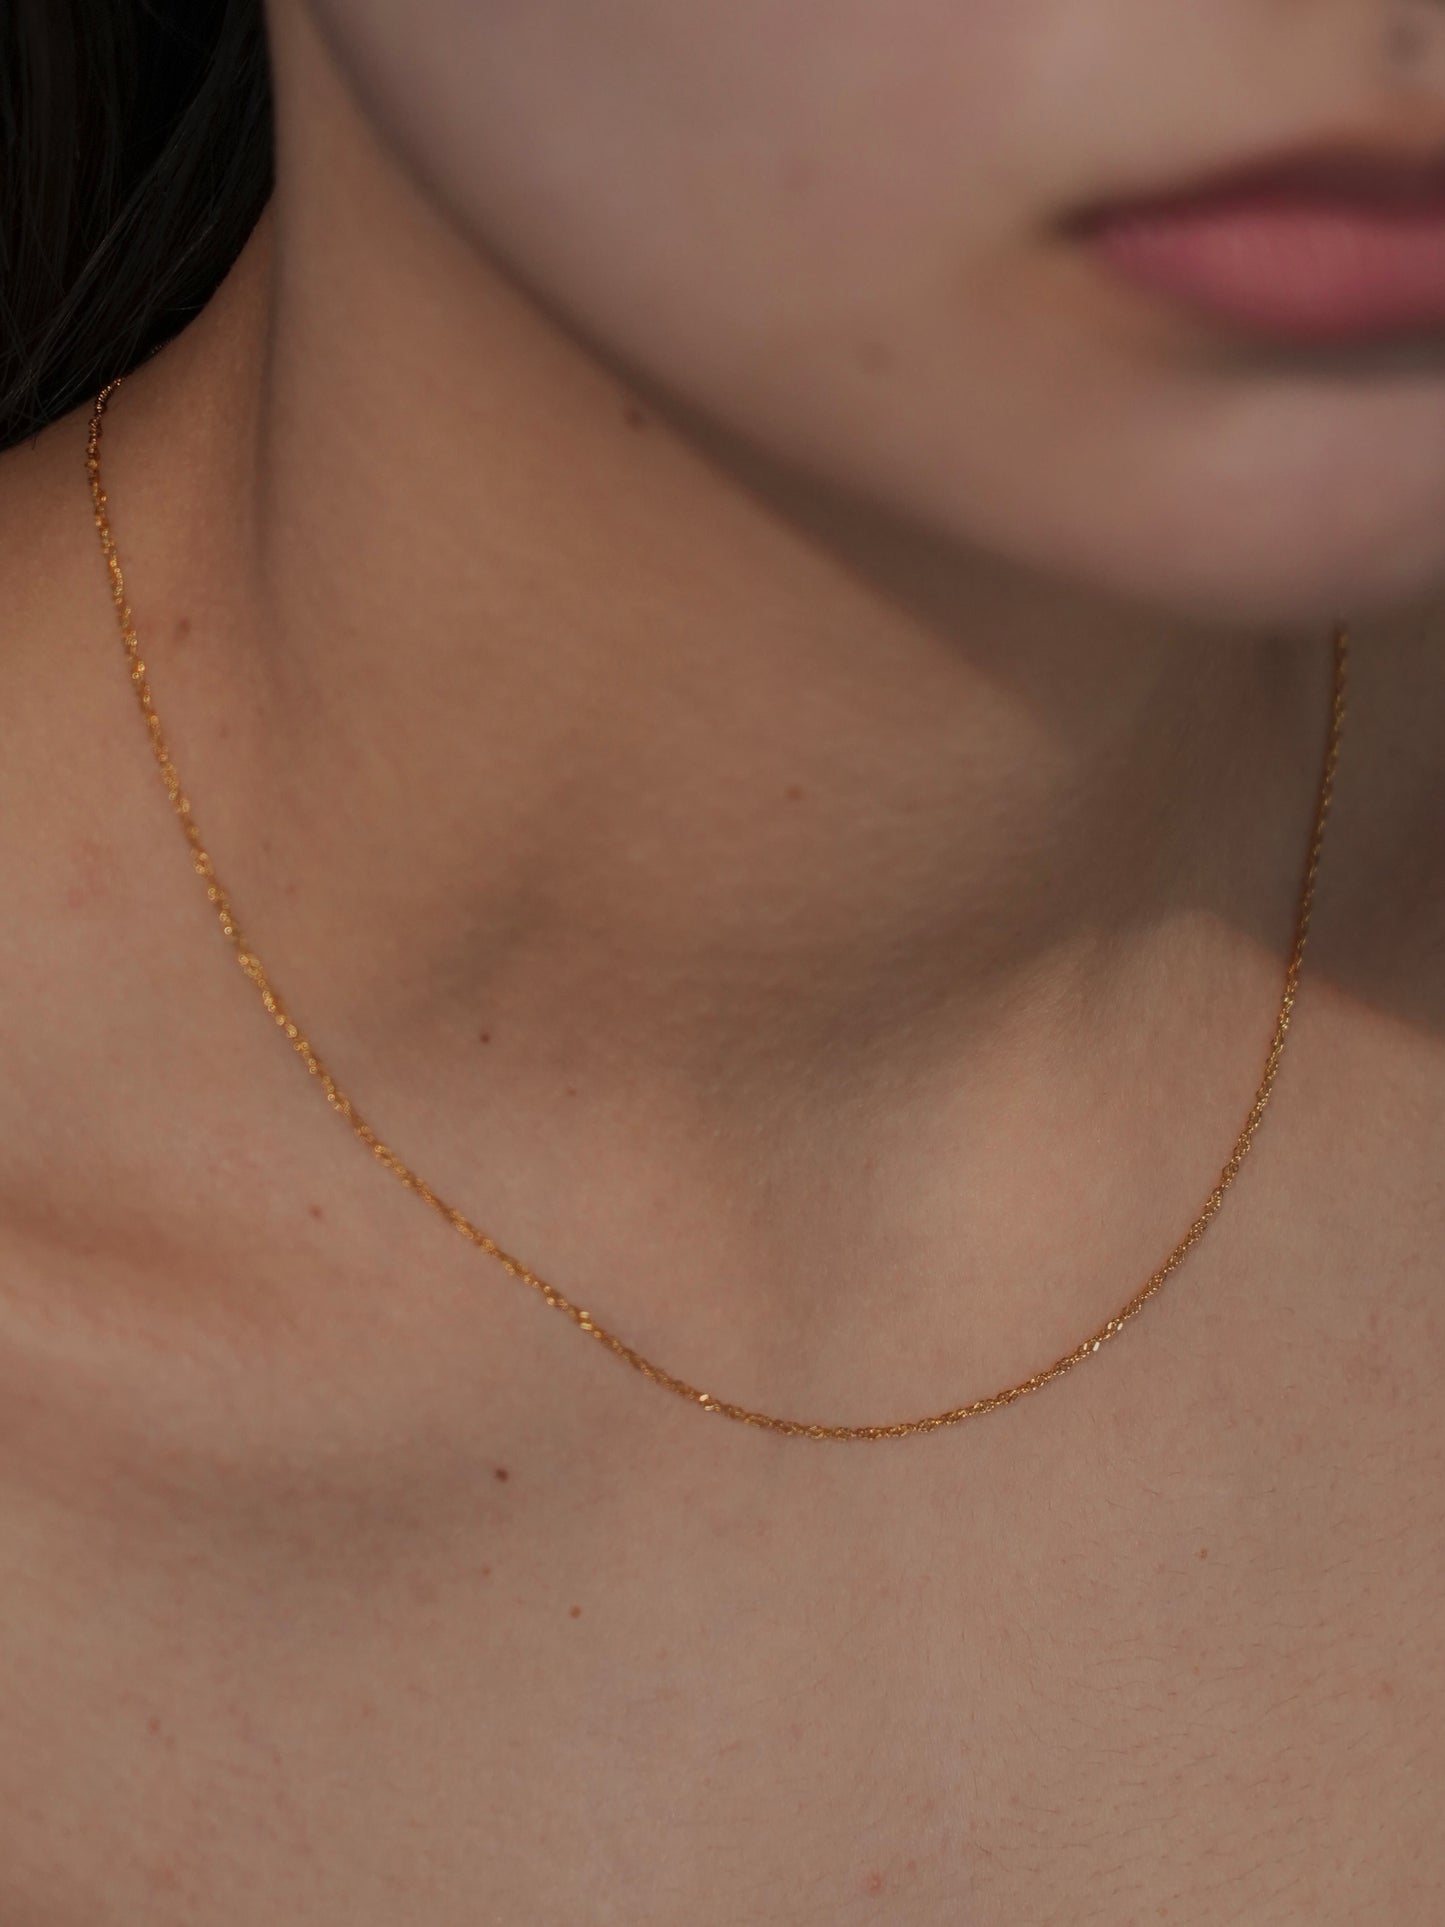 MaQui necklace / 14kgf